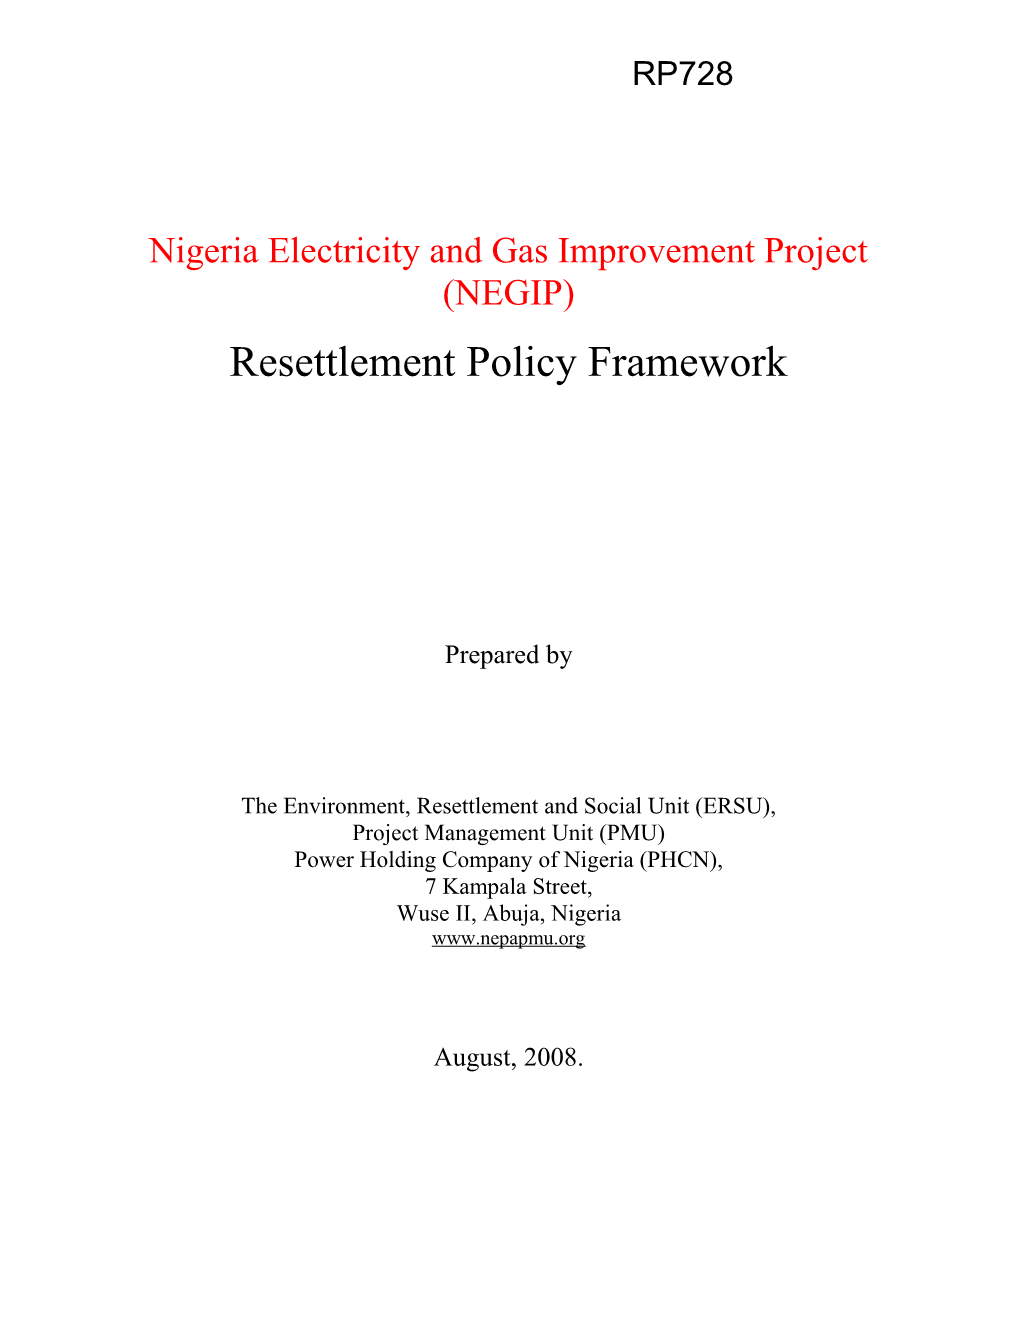 Appendix A: NEDP Resettlement Policy Framework